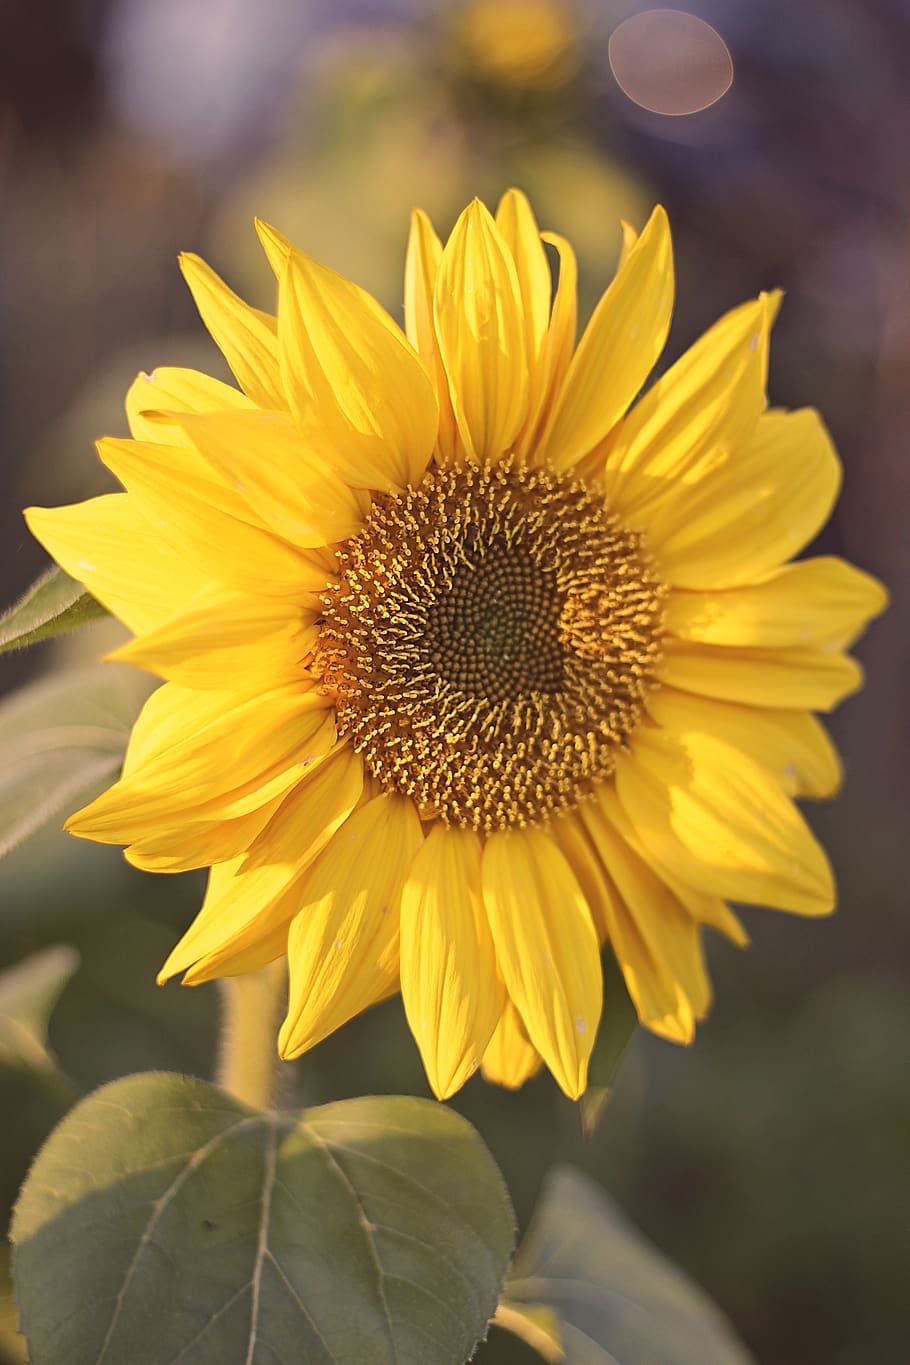 bunga matahari, bunga, mekar, komposit, helianthus annuus, musim gugur, cerah, kuning, alam, ceria